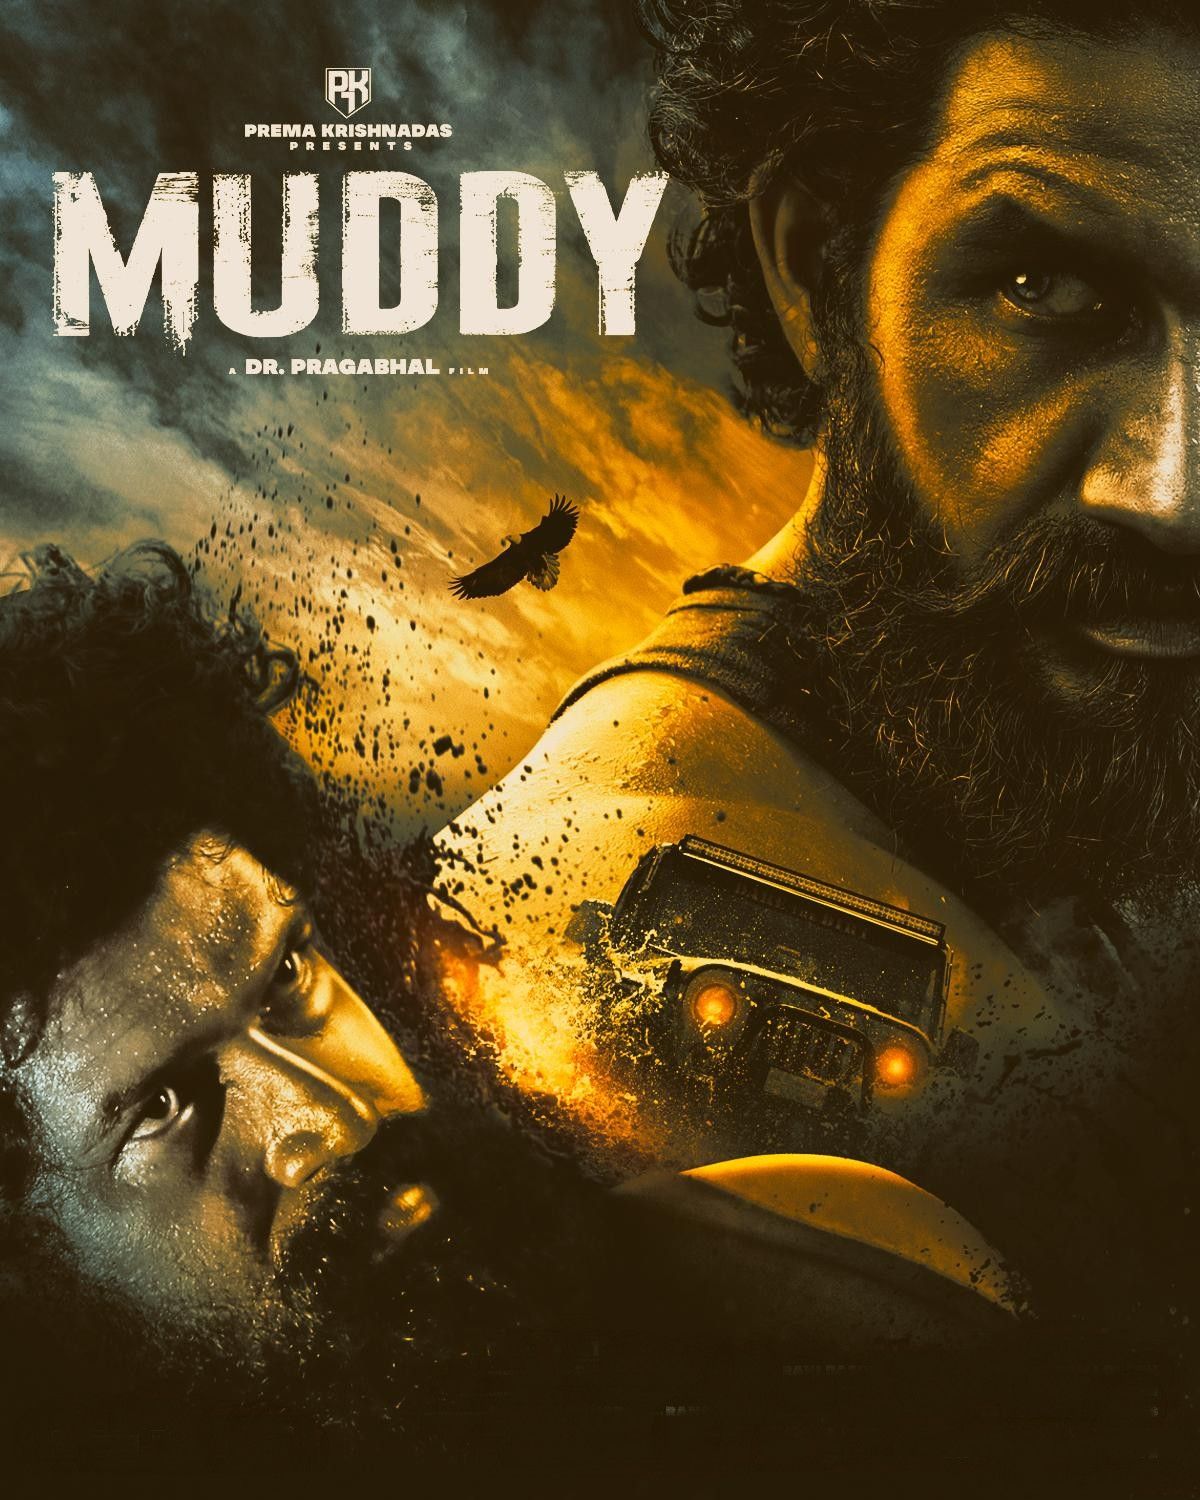 Muddy (2021) Hindi Dubbed HDRip download full movie